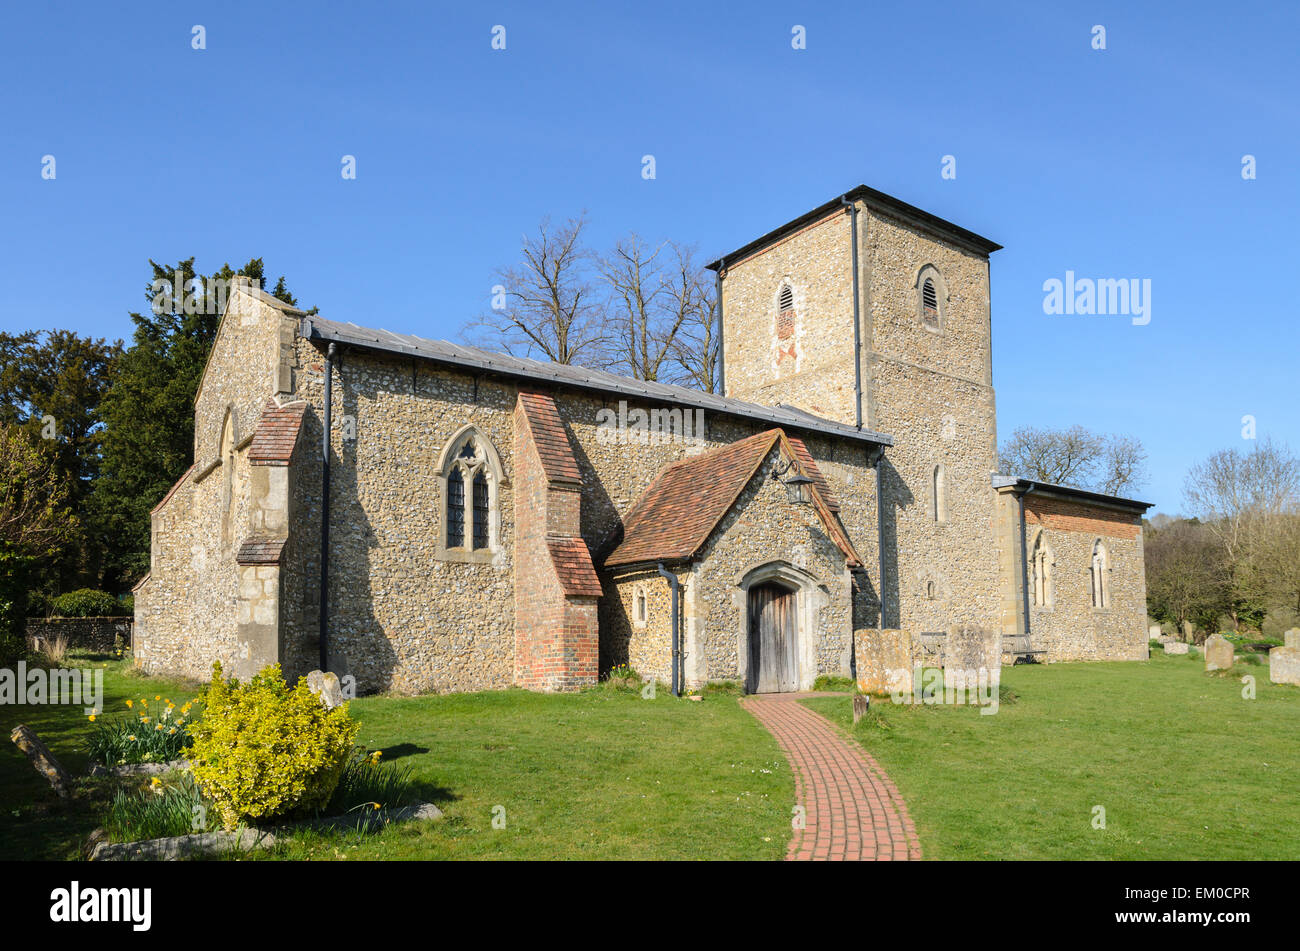 The 12 Century Church of St Mary the Virgin, Radnage, Buckinghamshire, U.K. Stock Photo